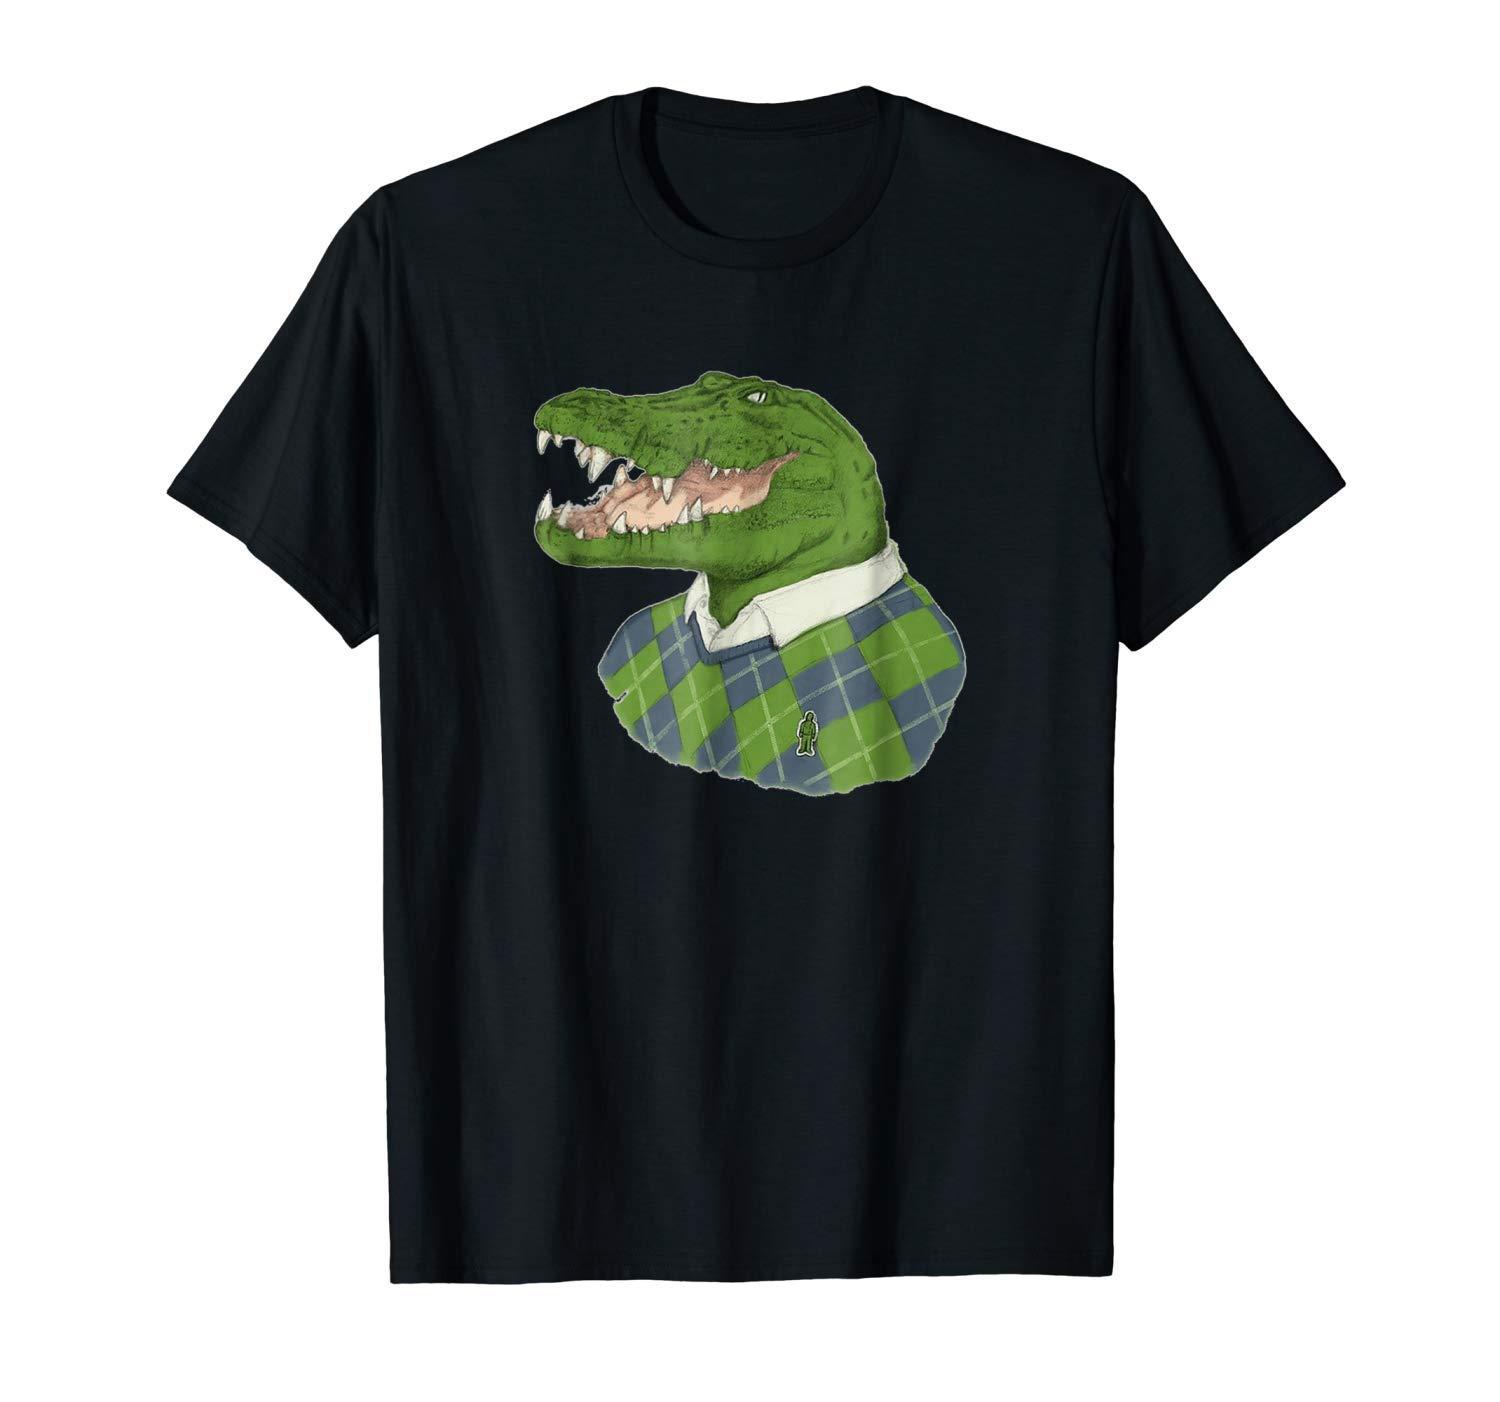 Clothing with Alligator Logo - Alligator Crocodile T Shirt Cute Zoo Animal Jungle T Shirt Brand ...